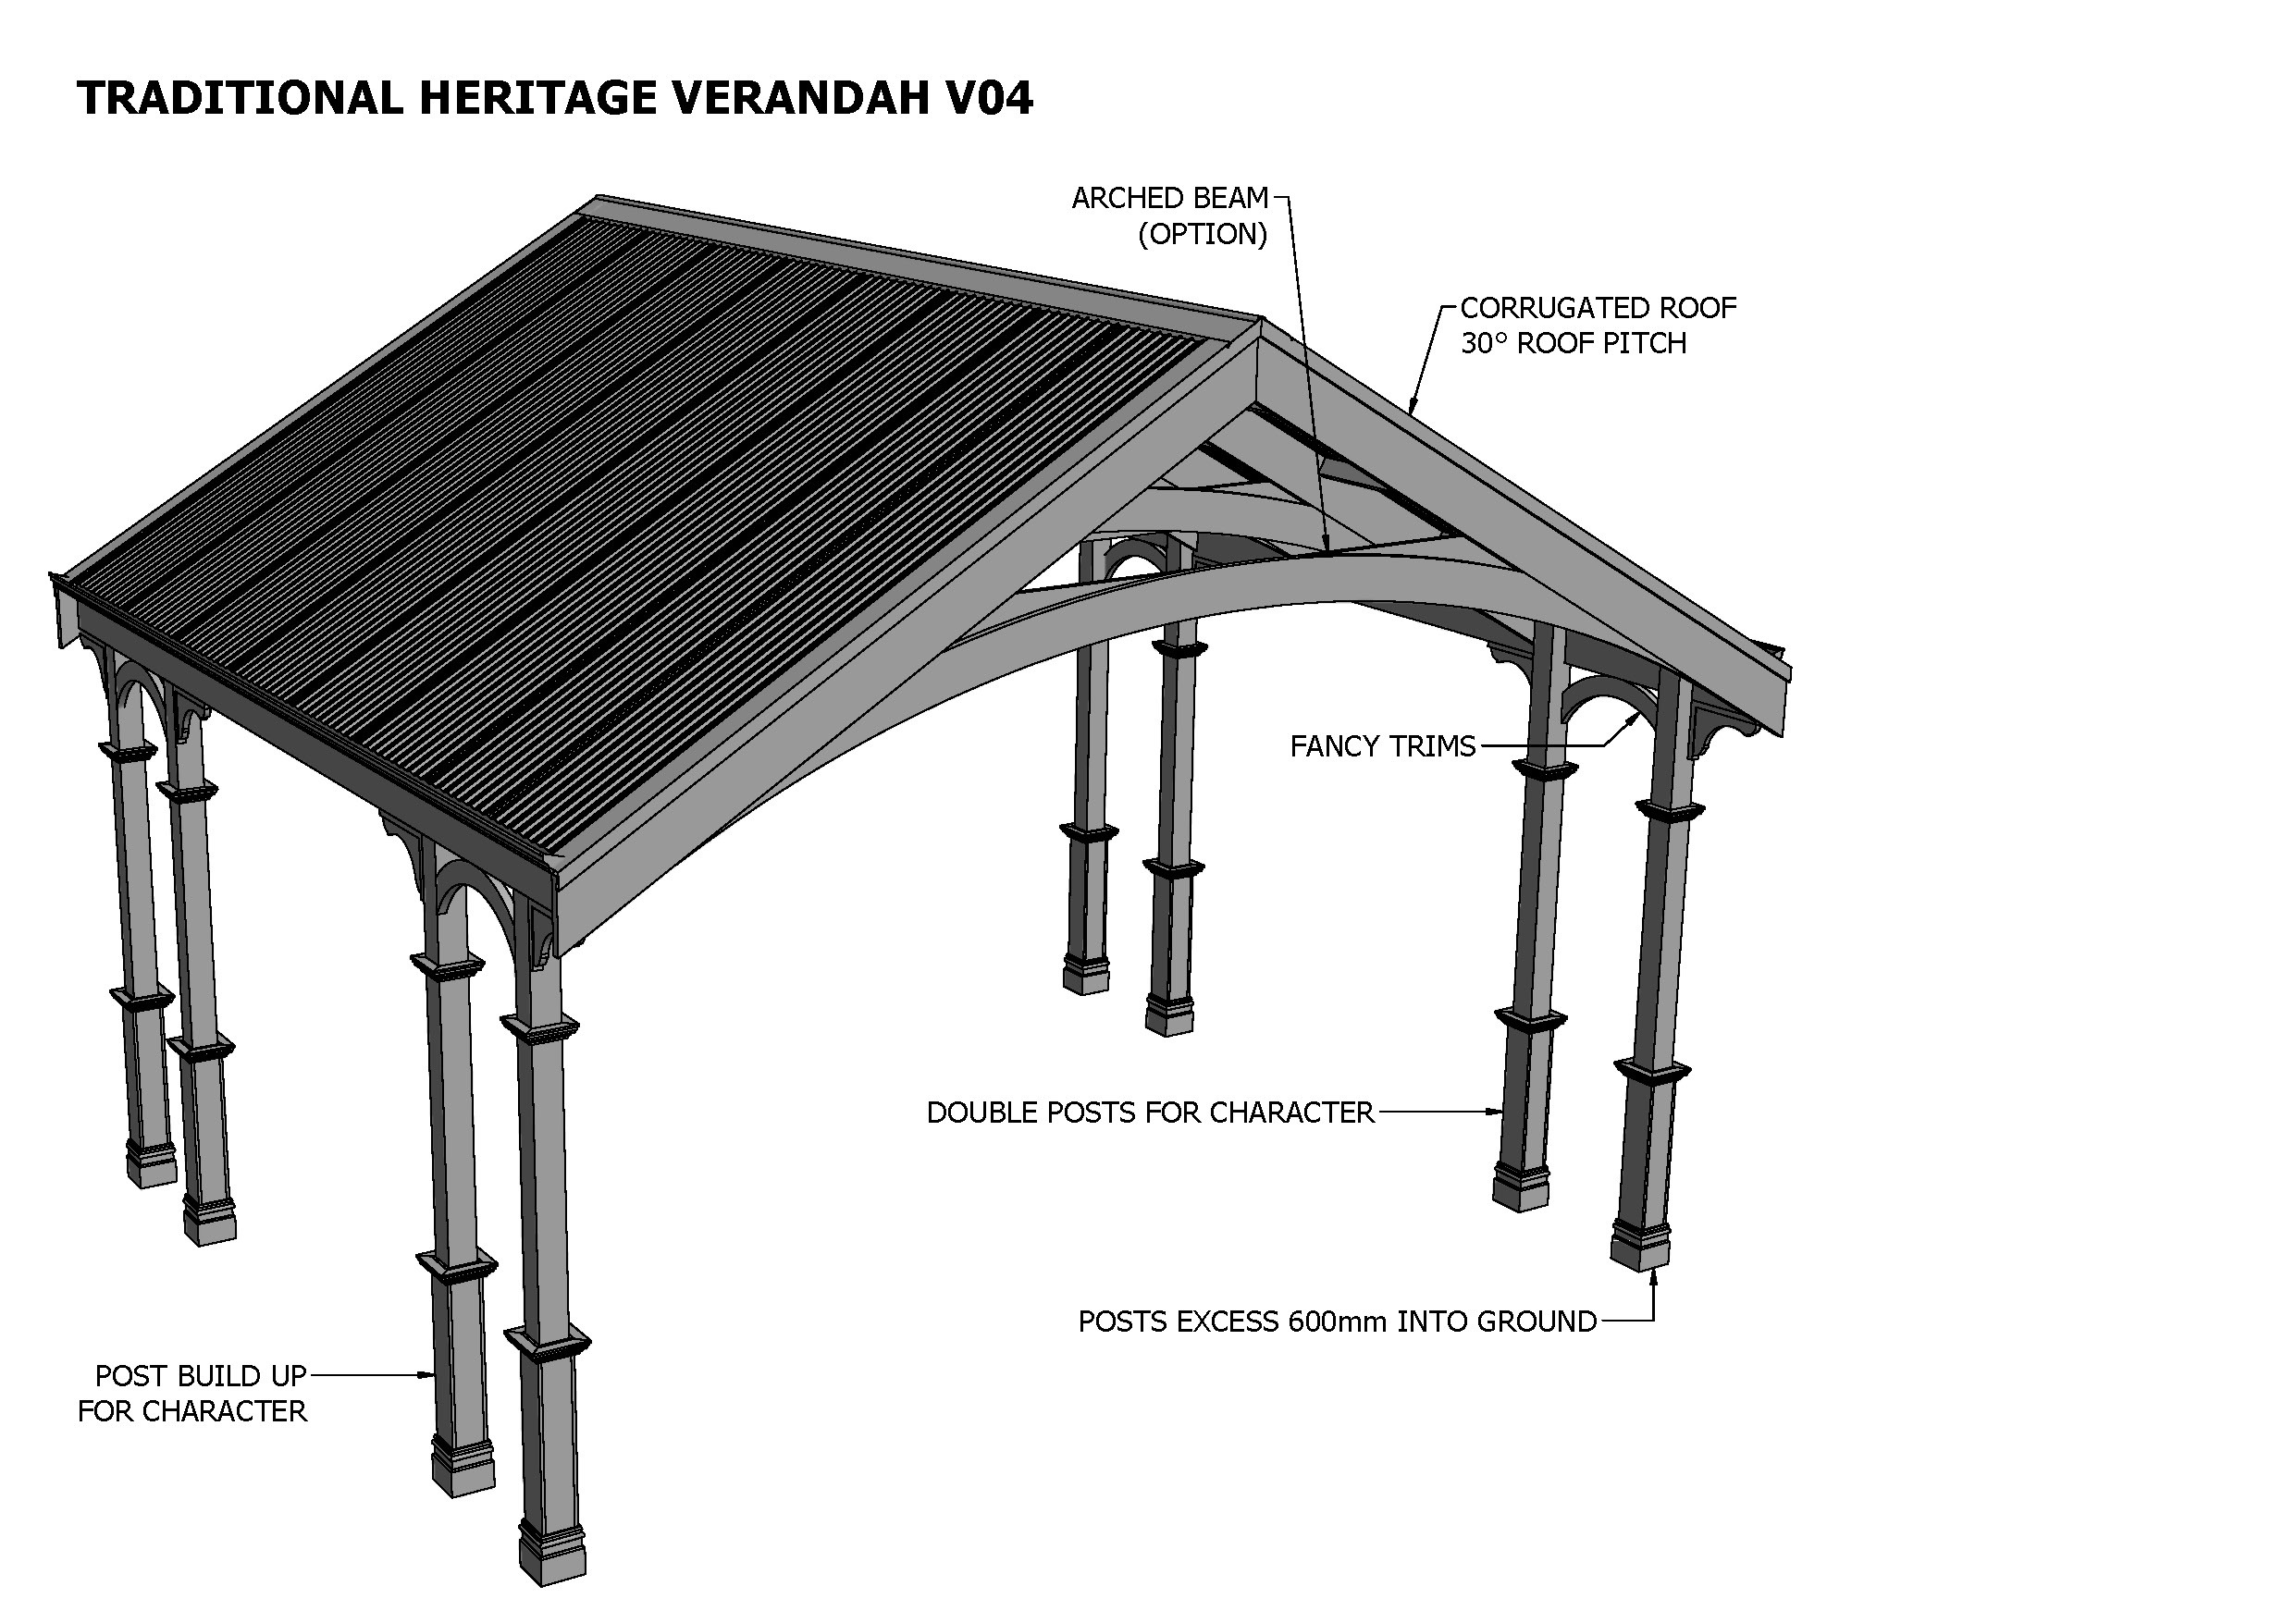 TRADITIONAL HERITAGE CARPORT / VERANDAH V04 (Building Plans ONLY)